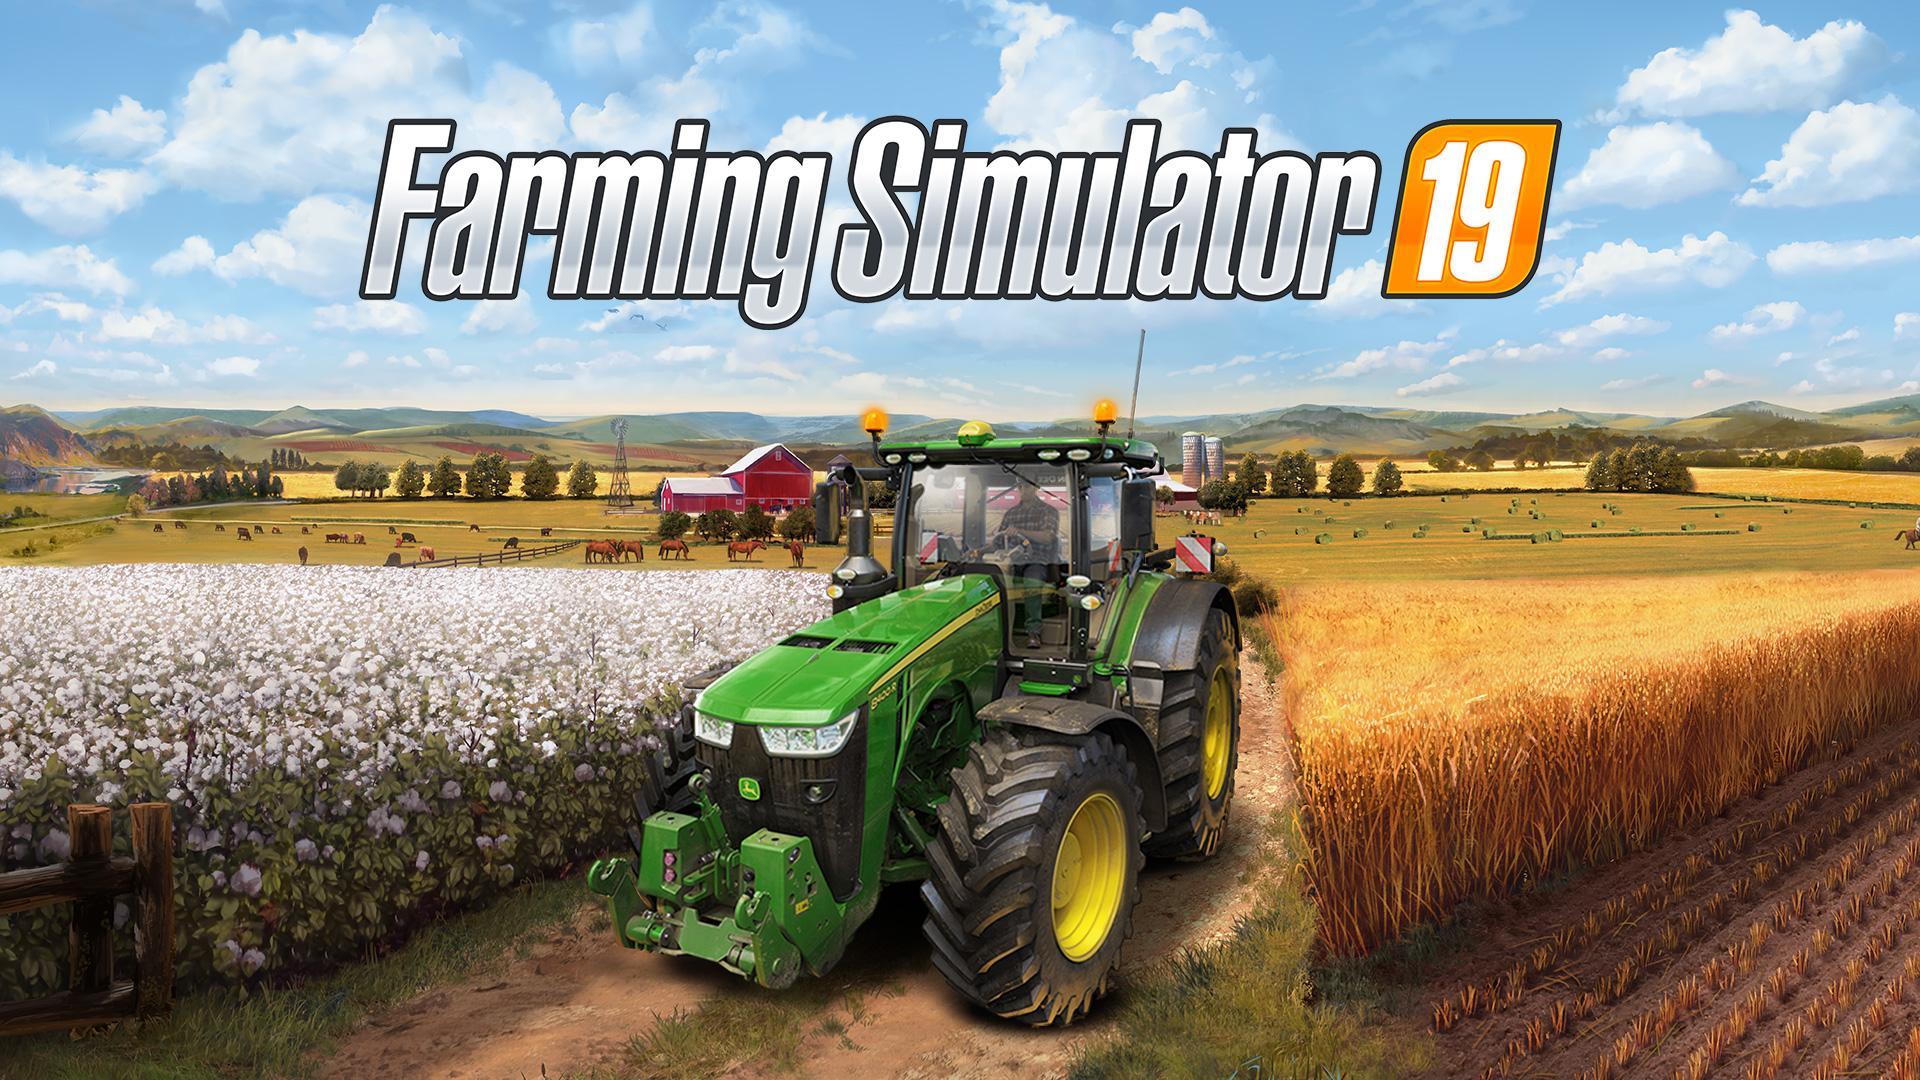 farm simulator 22 mod apk